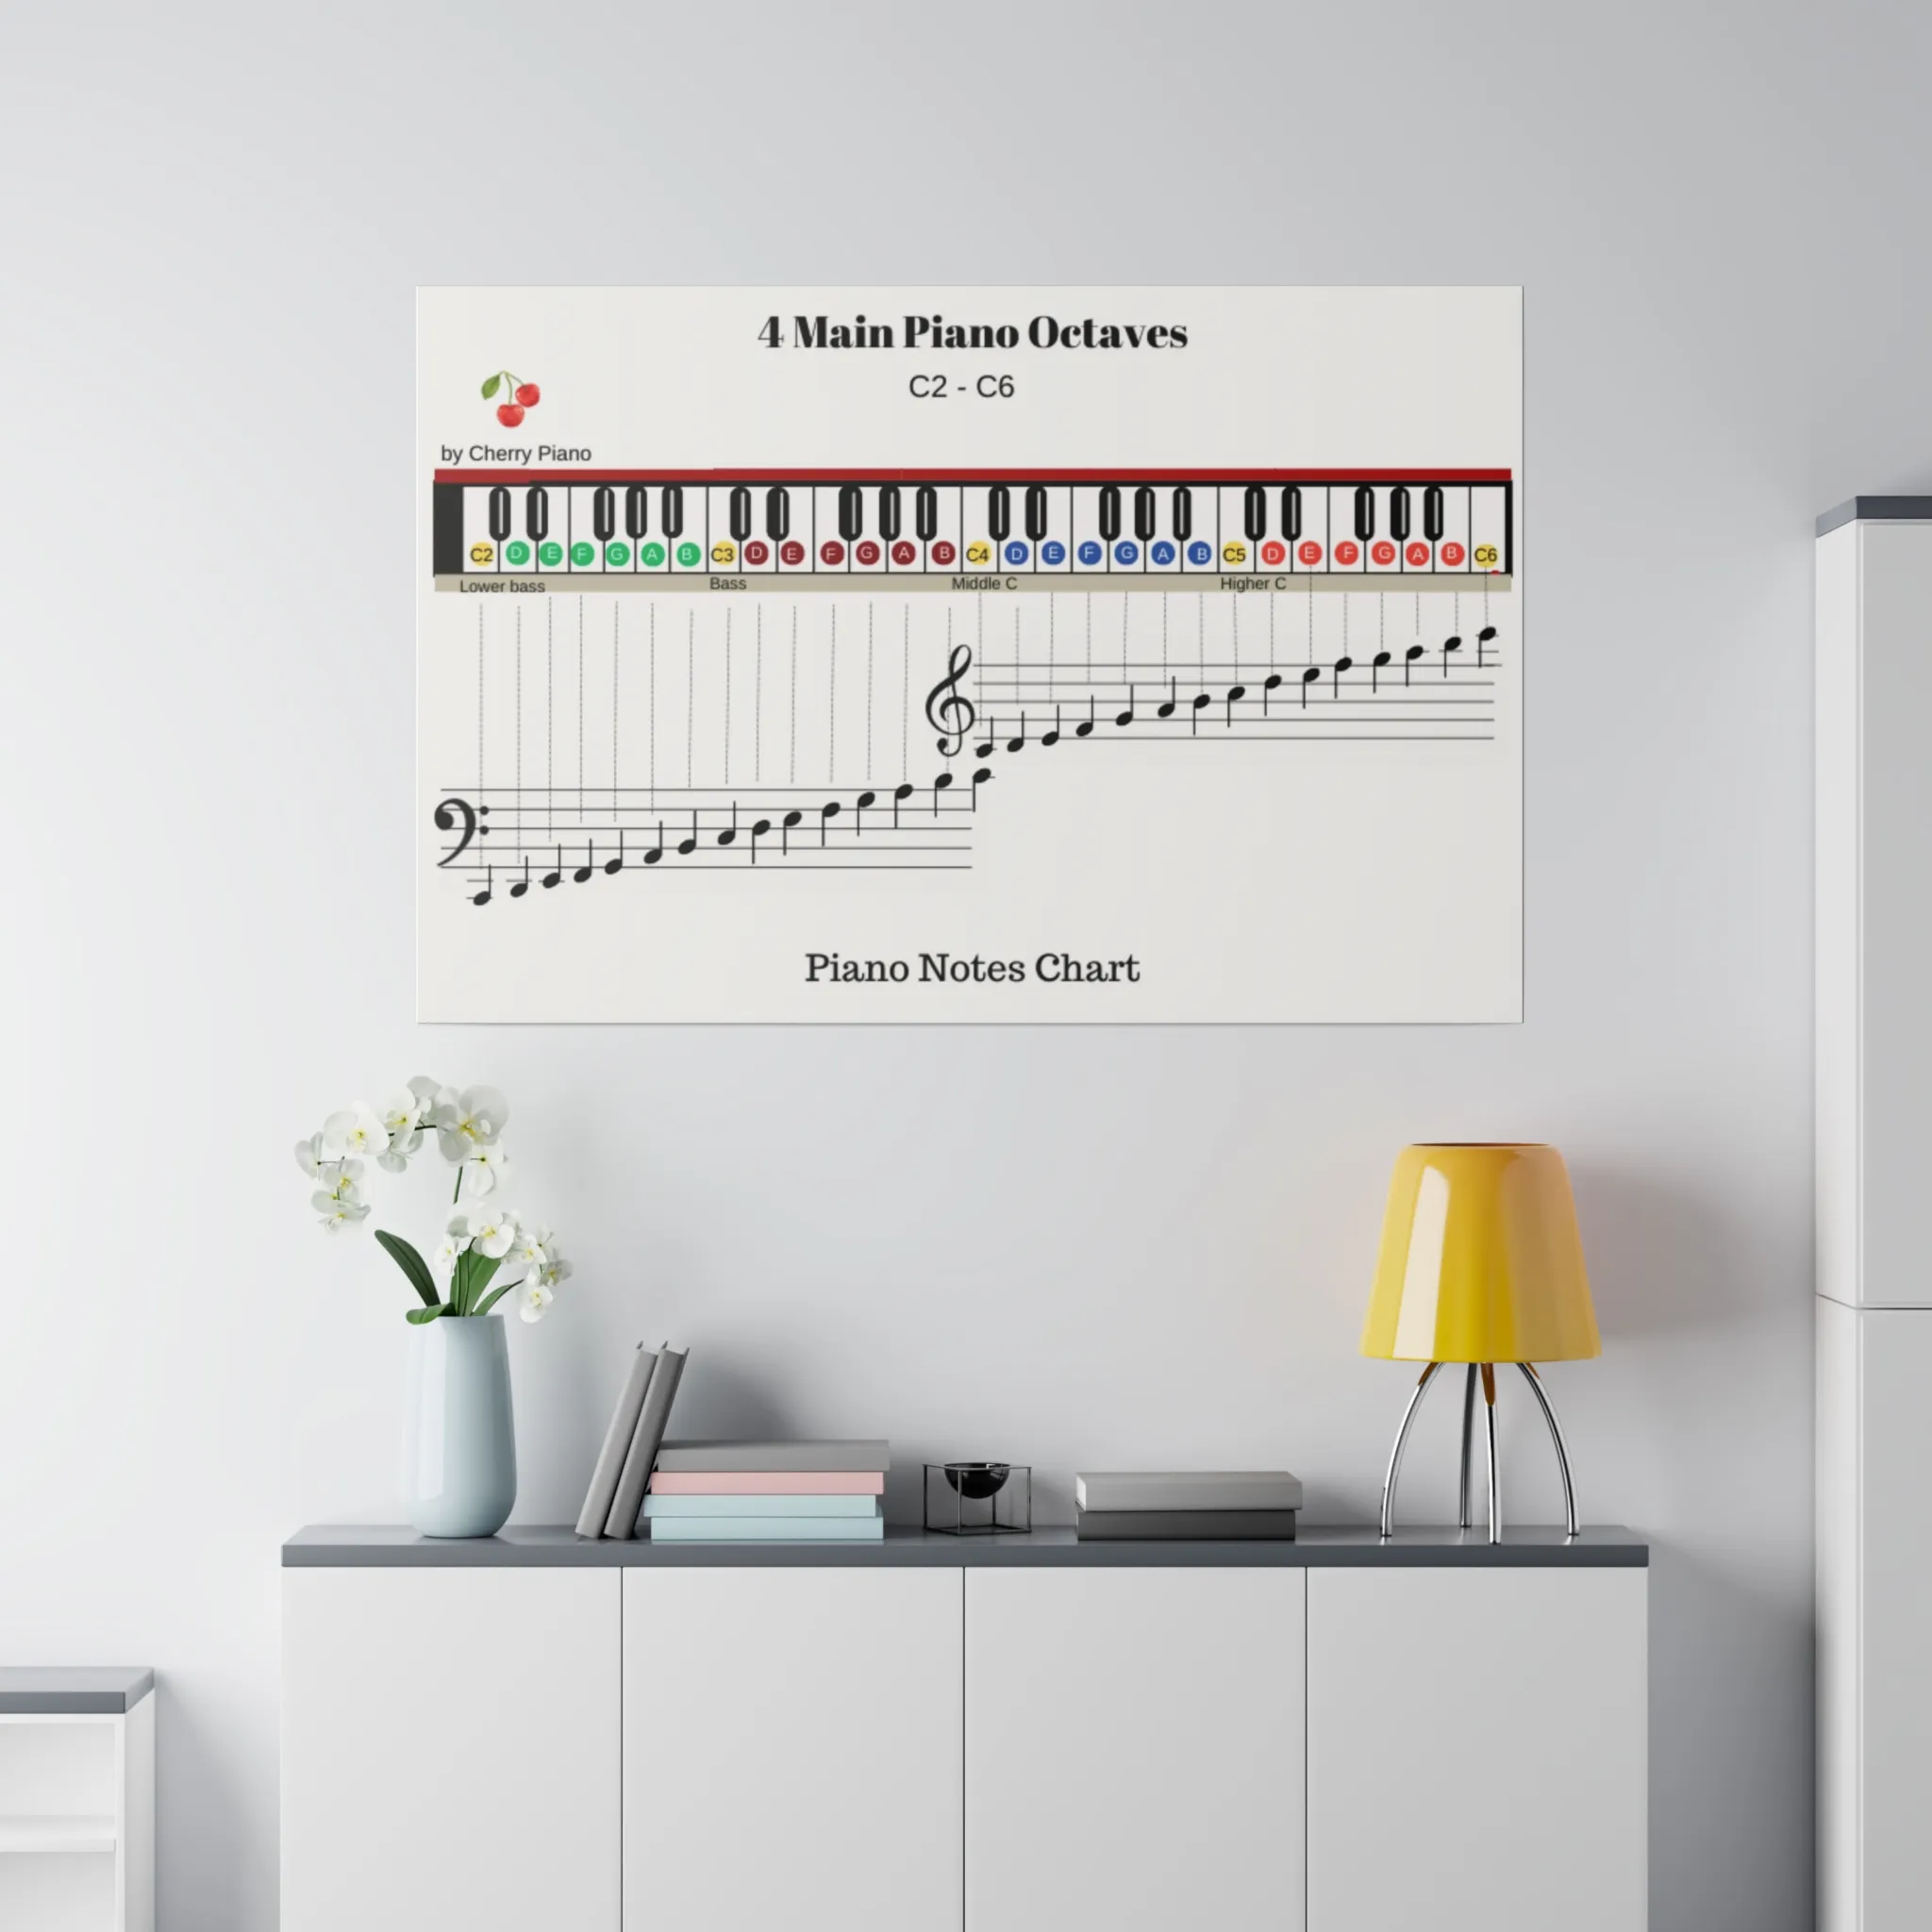 Piano Notes Chart Canvas